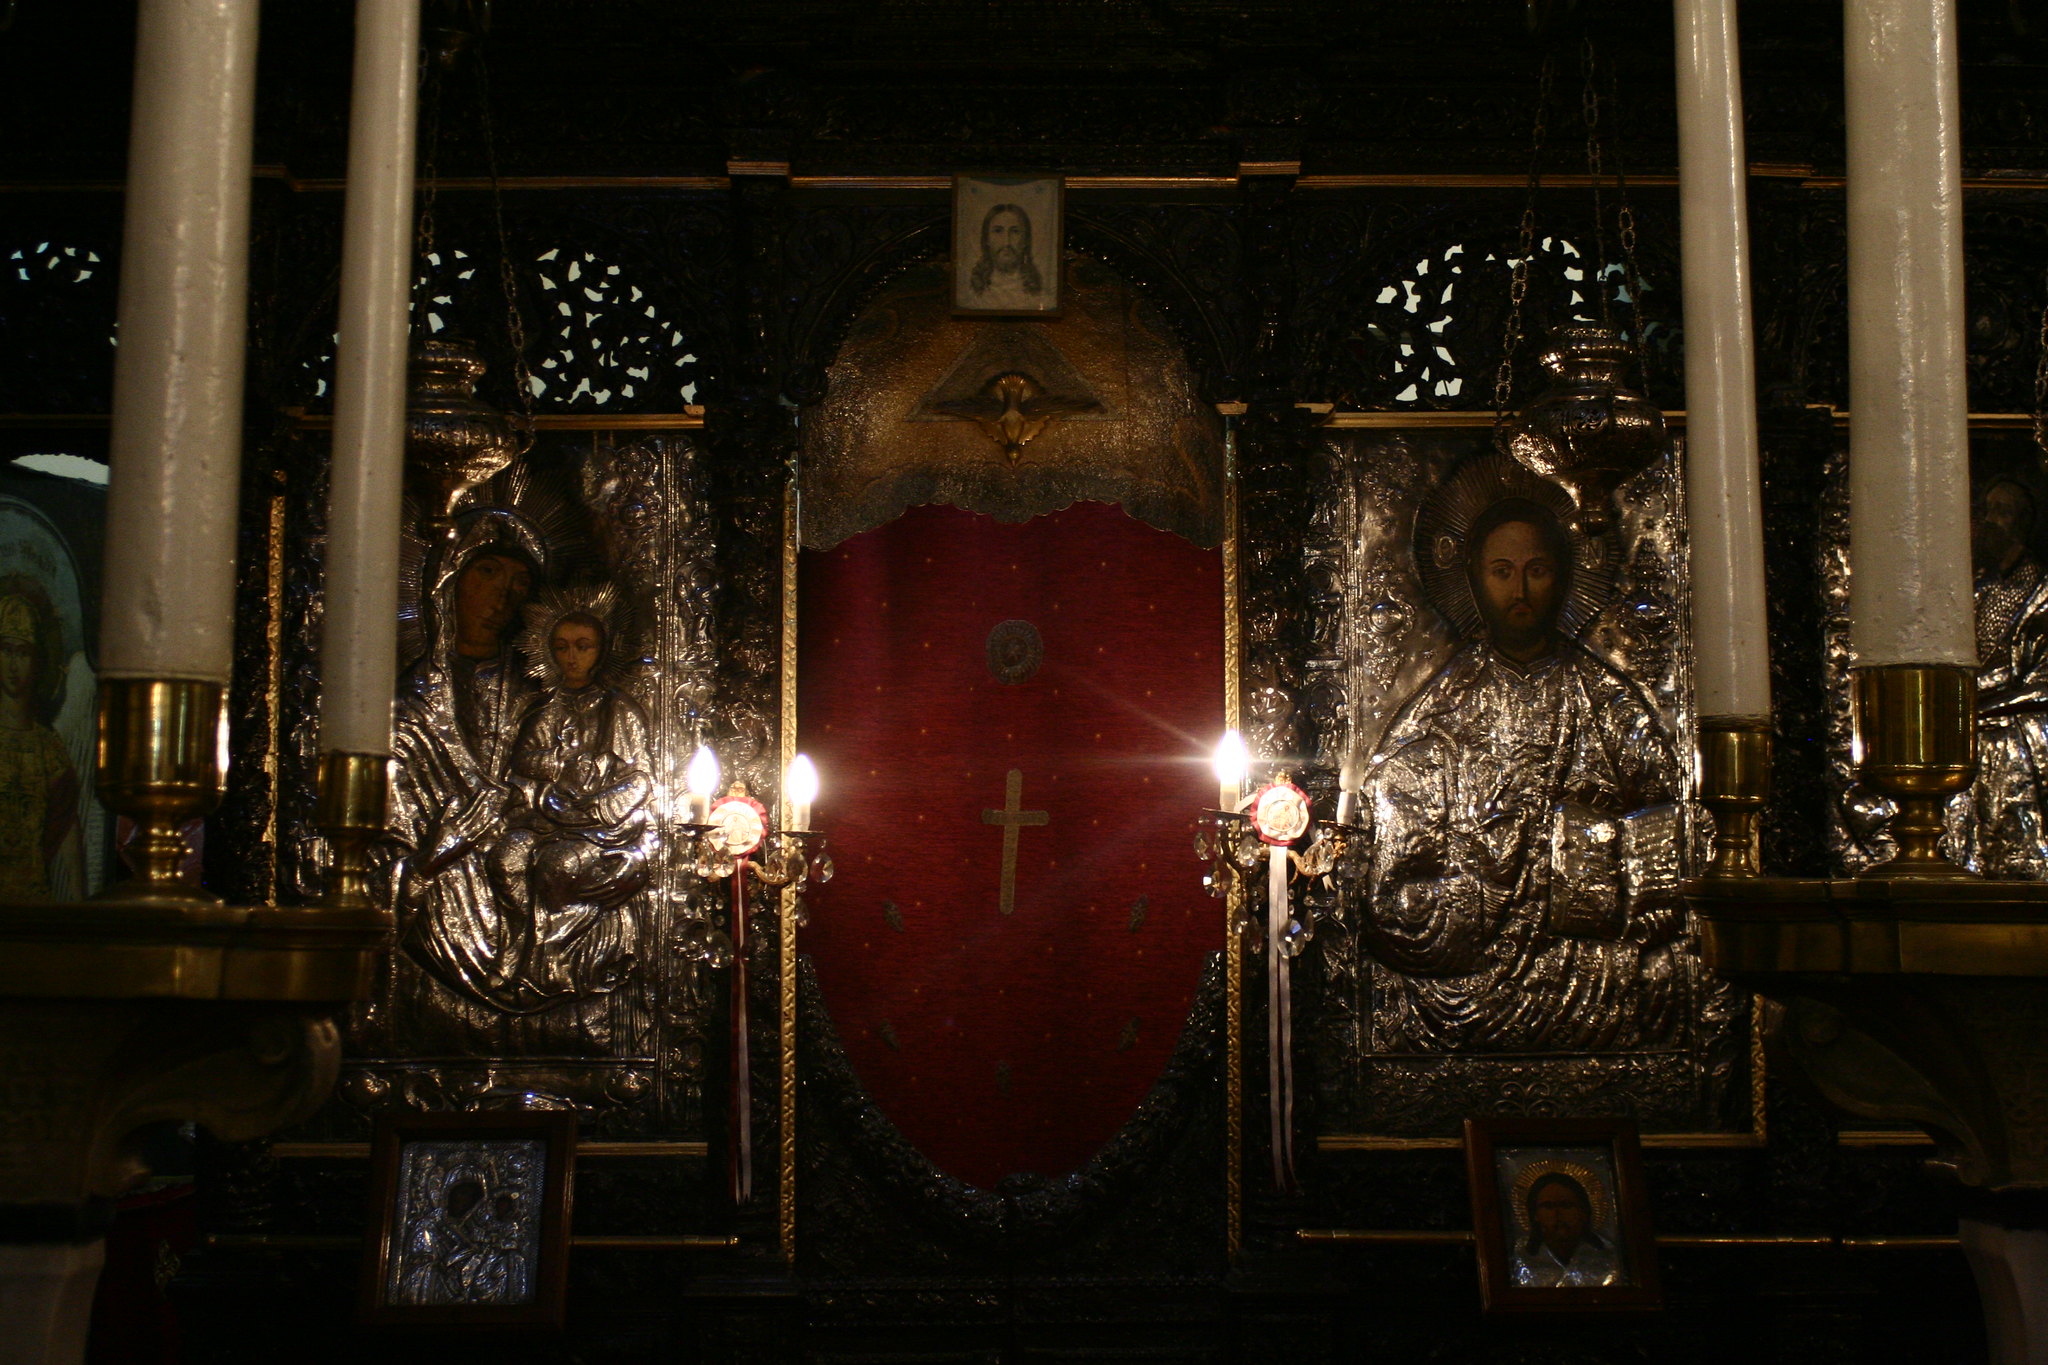 Inside an Orthodox church